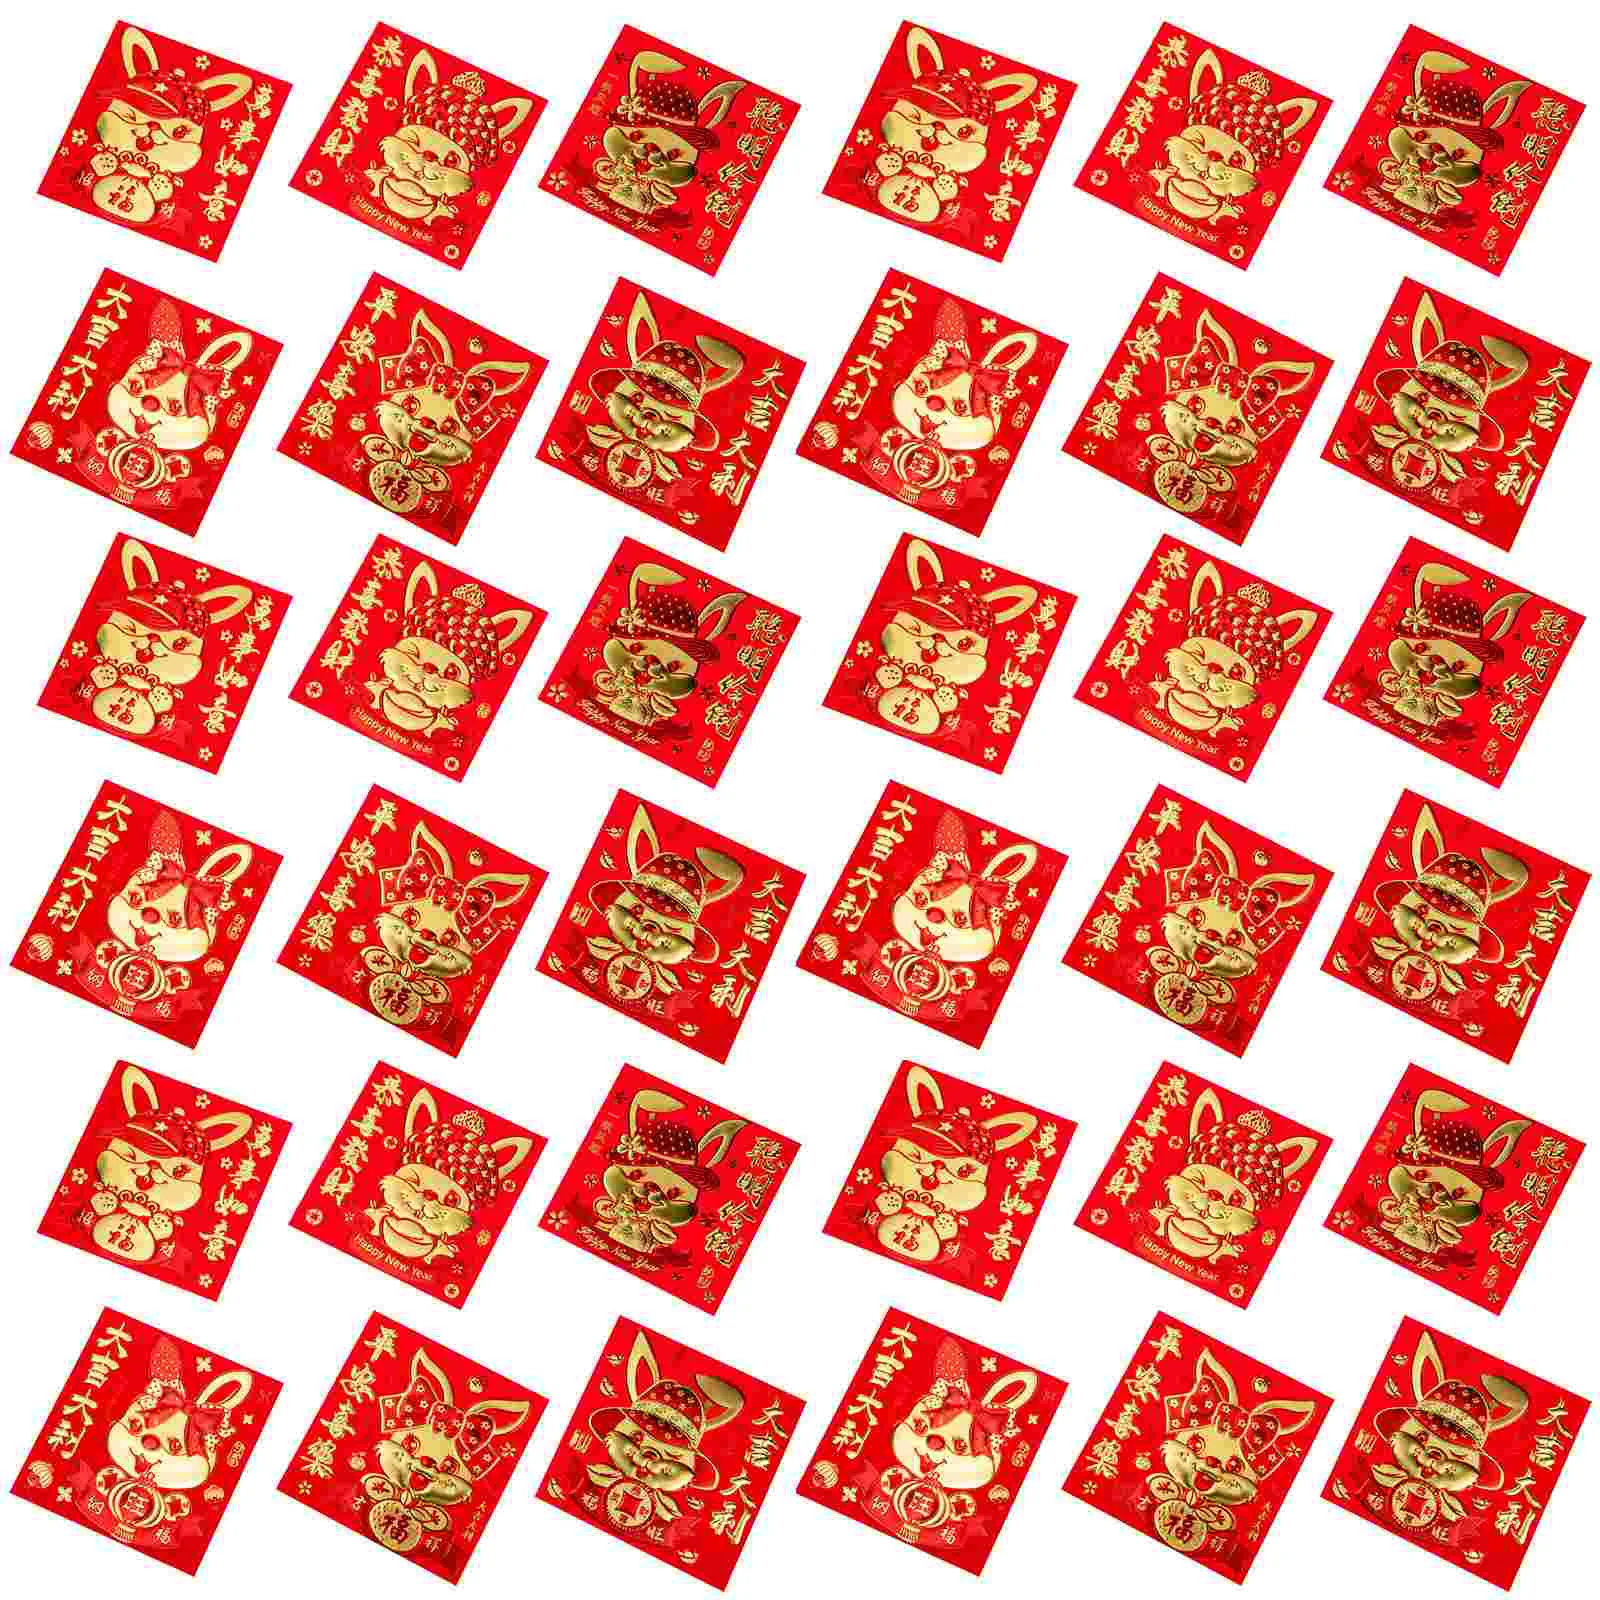 

Red Envelopes Money Year New Chinese Packet Envelope Packets Festival Zodiac Rabbitspring Lucky Hong Bao Lunar Pocket Paper Cash